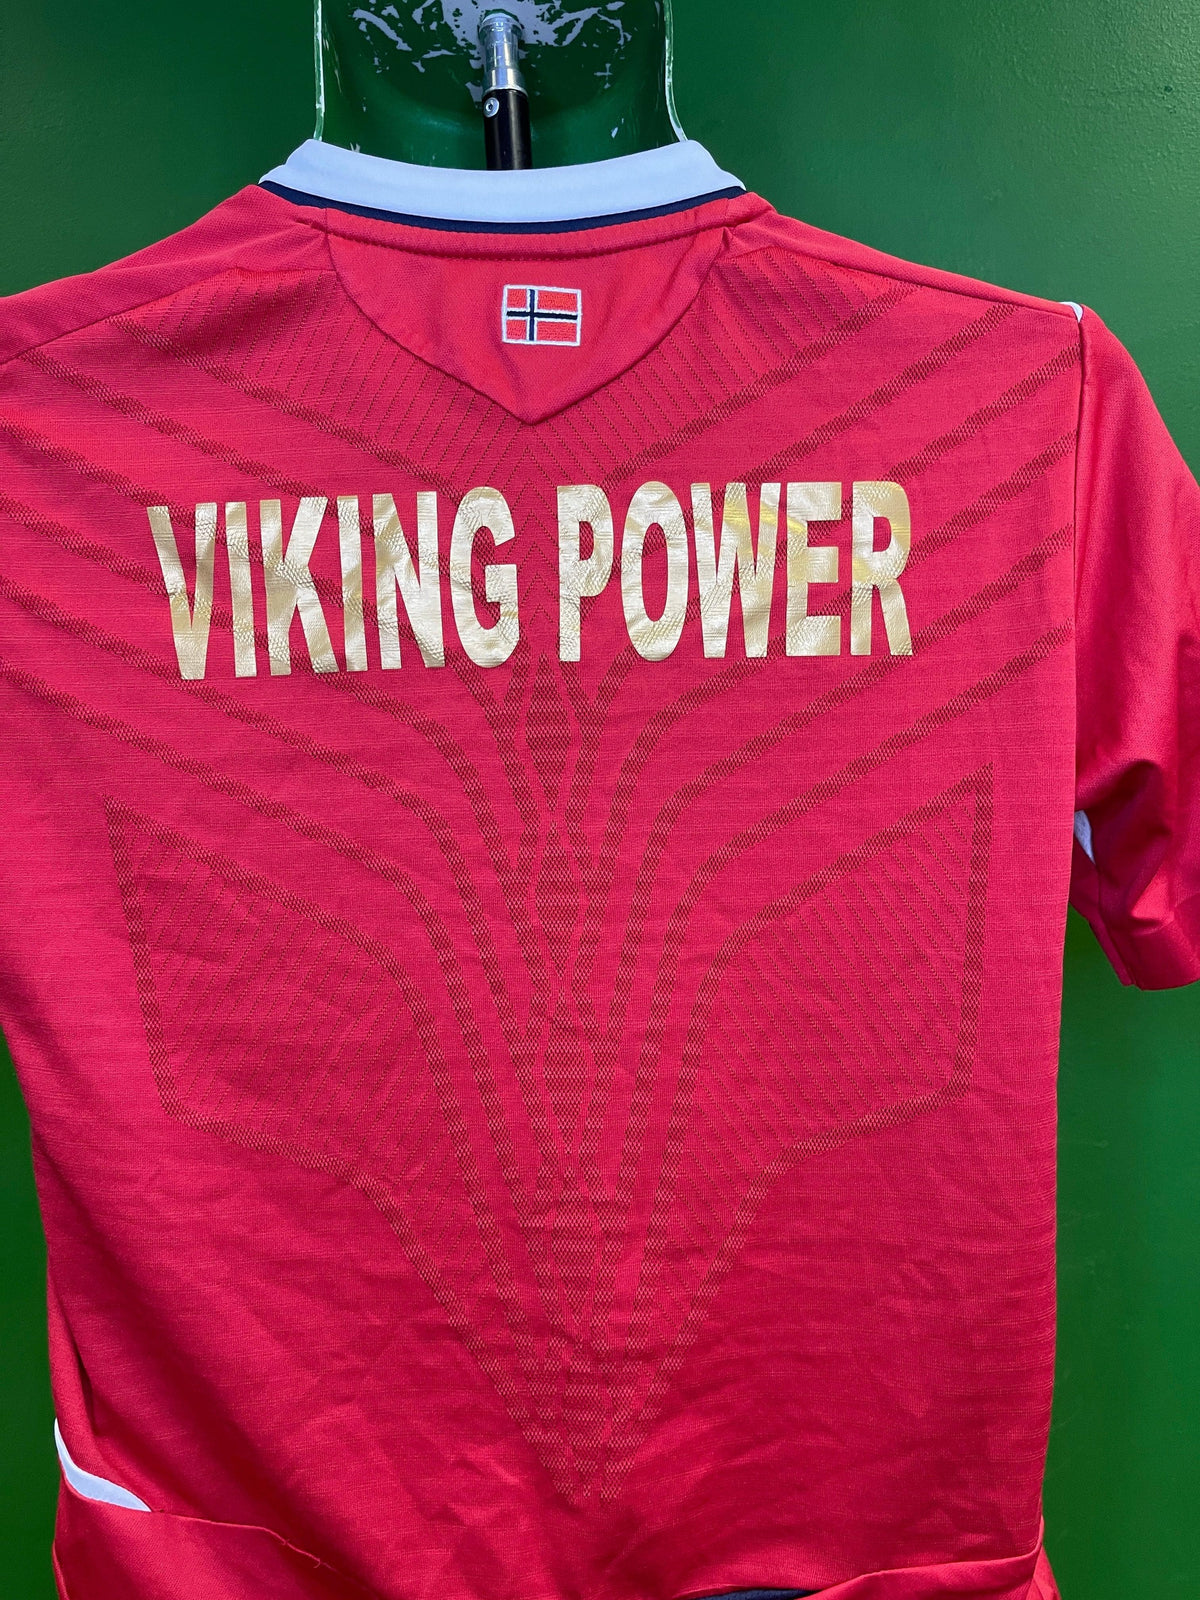 Norway Umbro Football Shirt Jersey Viking Power Youth Large 14-16